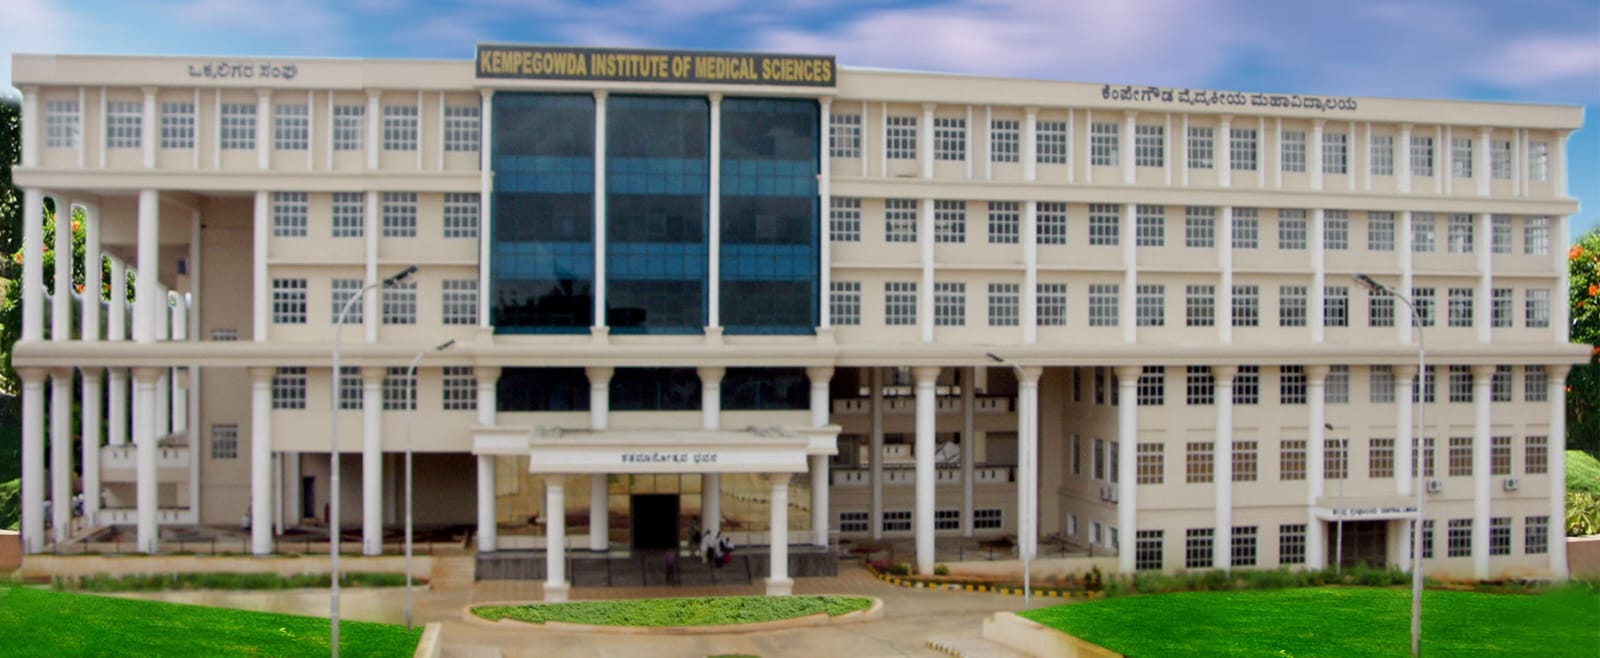 Kepegowda Institute of Medical Sciences.